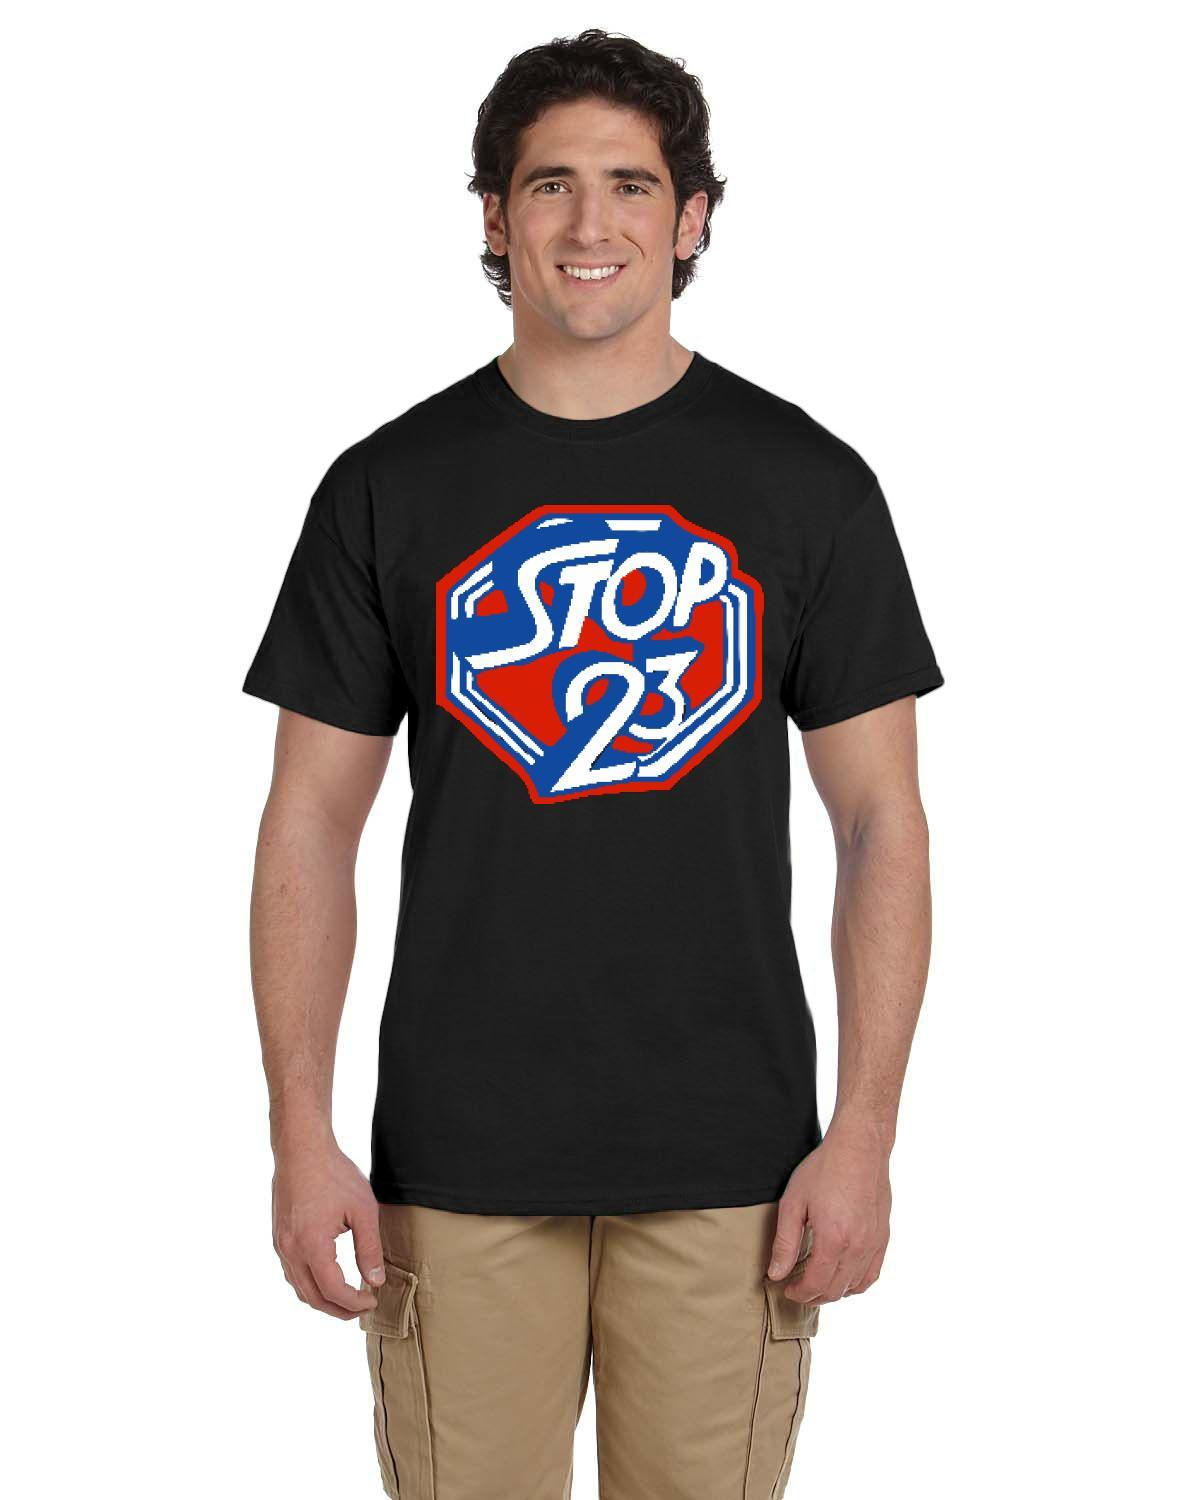 Stop 23 Men's T-Shirt (S-XL)